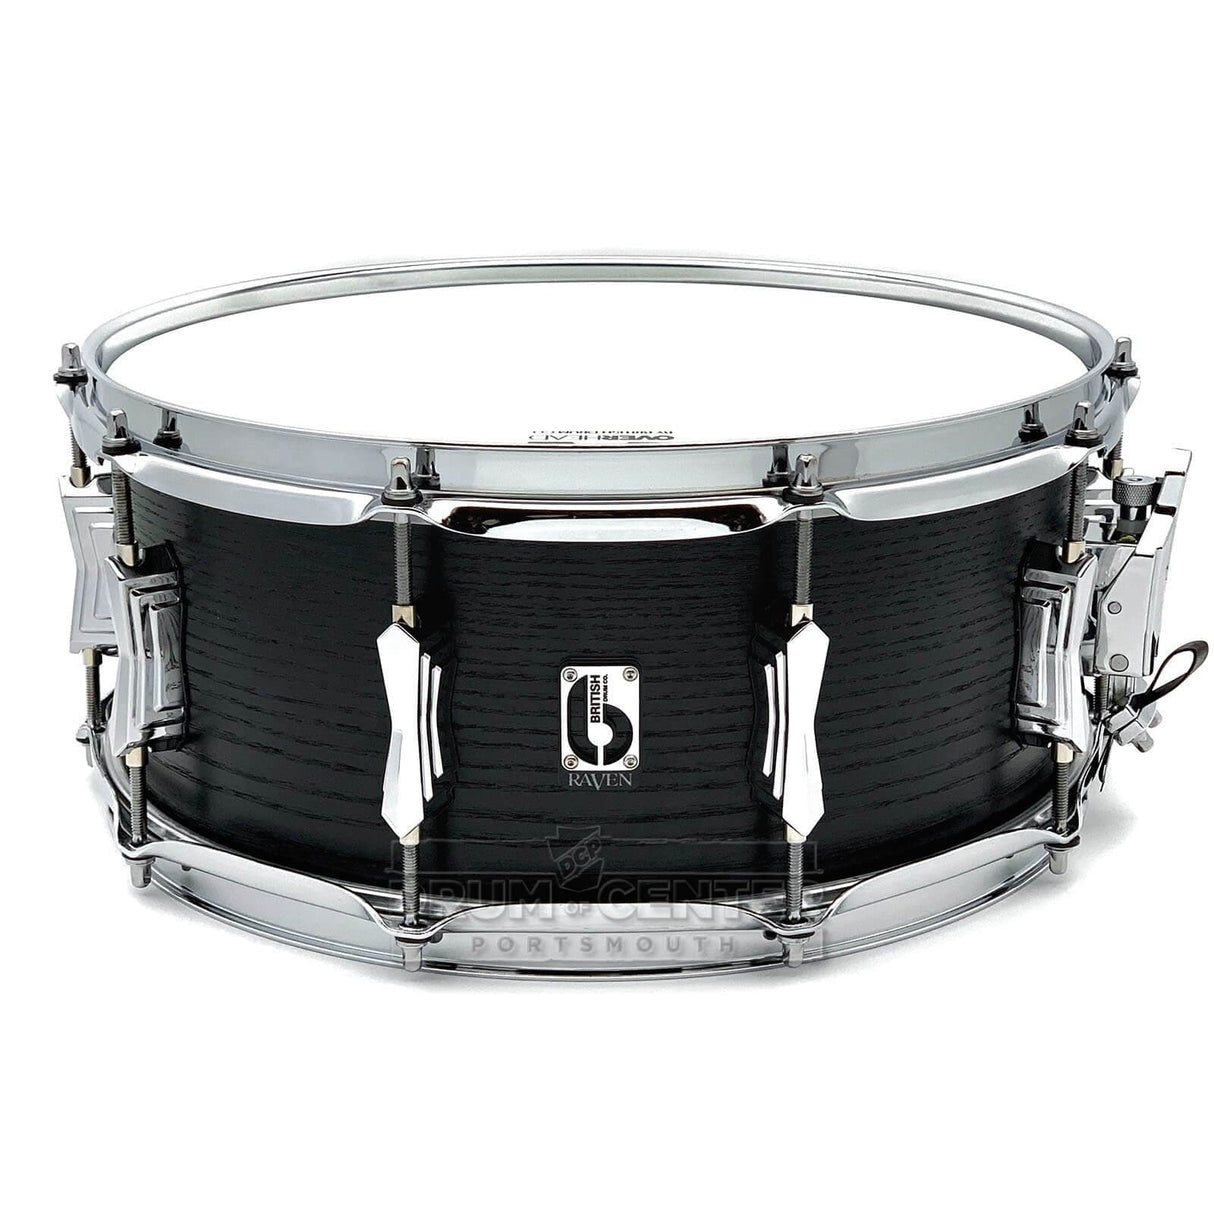 British Drum Company Raven Snare Drum 14x6 - Drum Center Of Portsmouth